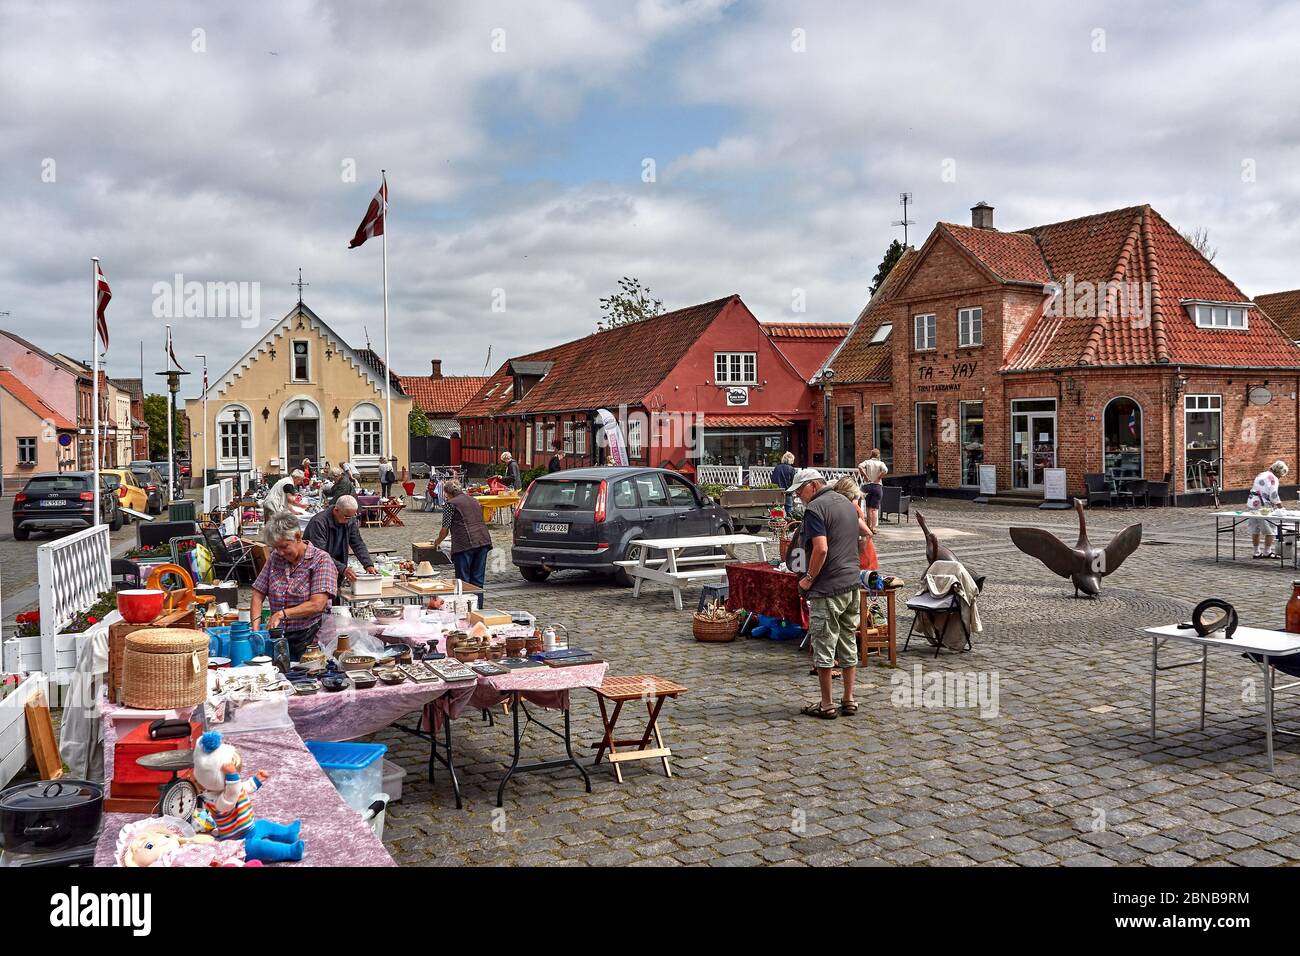 AAKIRKEBY, DENMARK - Jun 27, 2019: Aakirkeby, Bornholm island, Denmark - 27 June 2019. Local people trading goods in city market of Aakirkeby, Bornhol Stock Photo